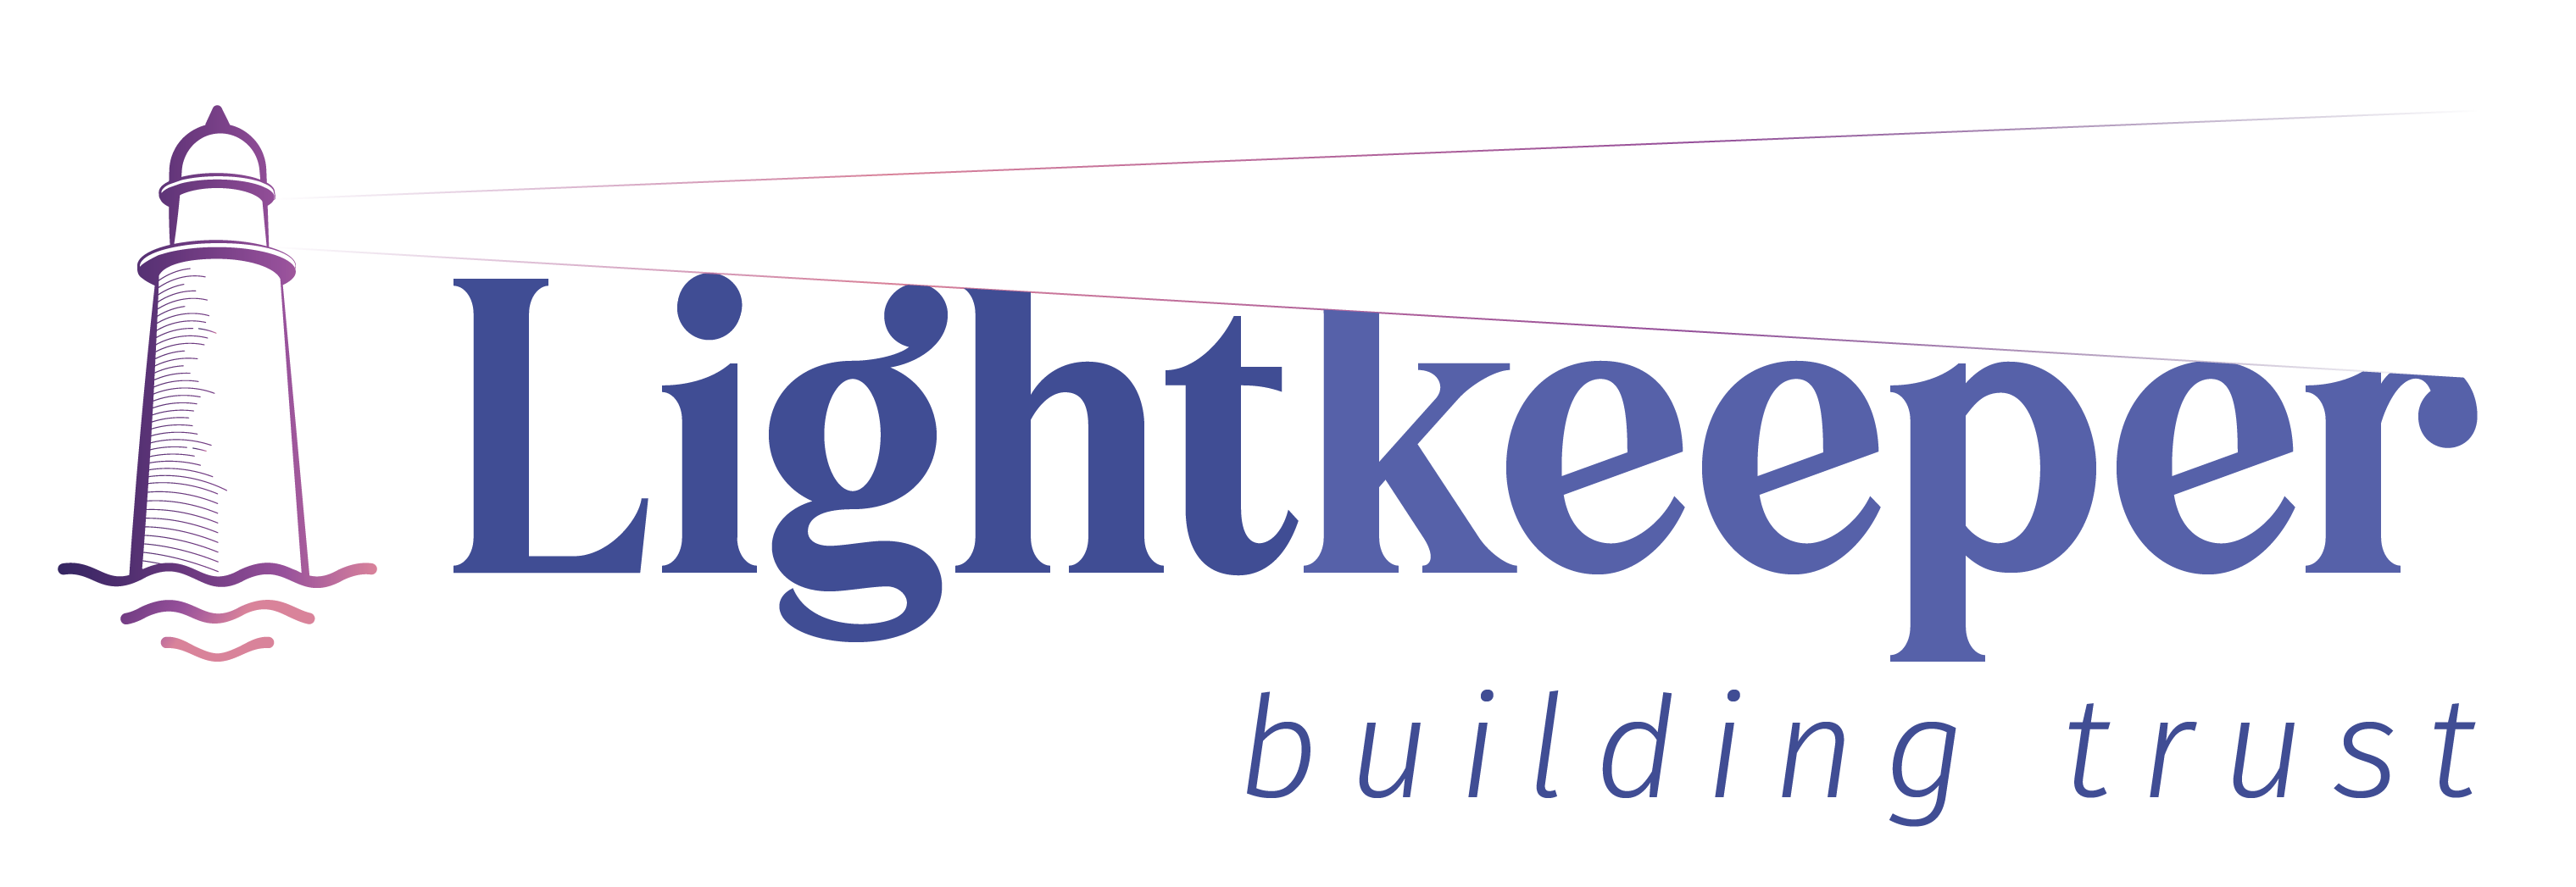 Lightkeeper - Building trust